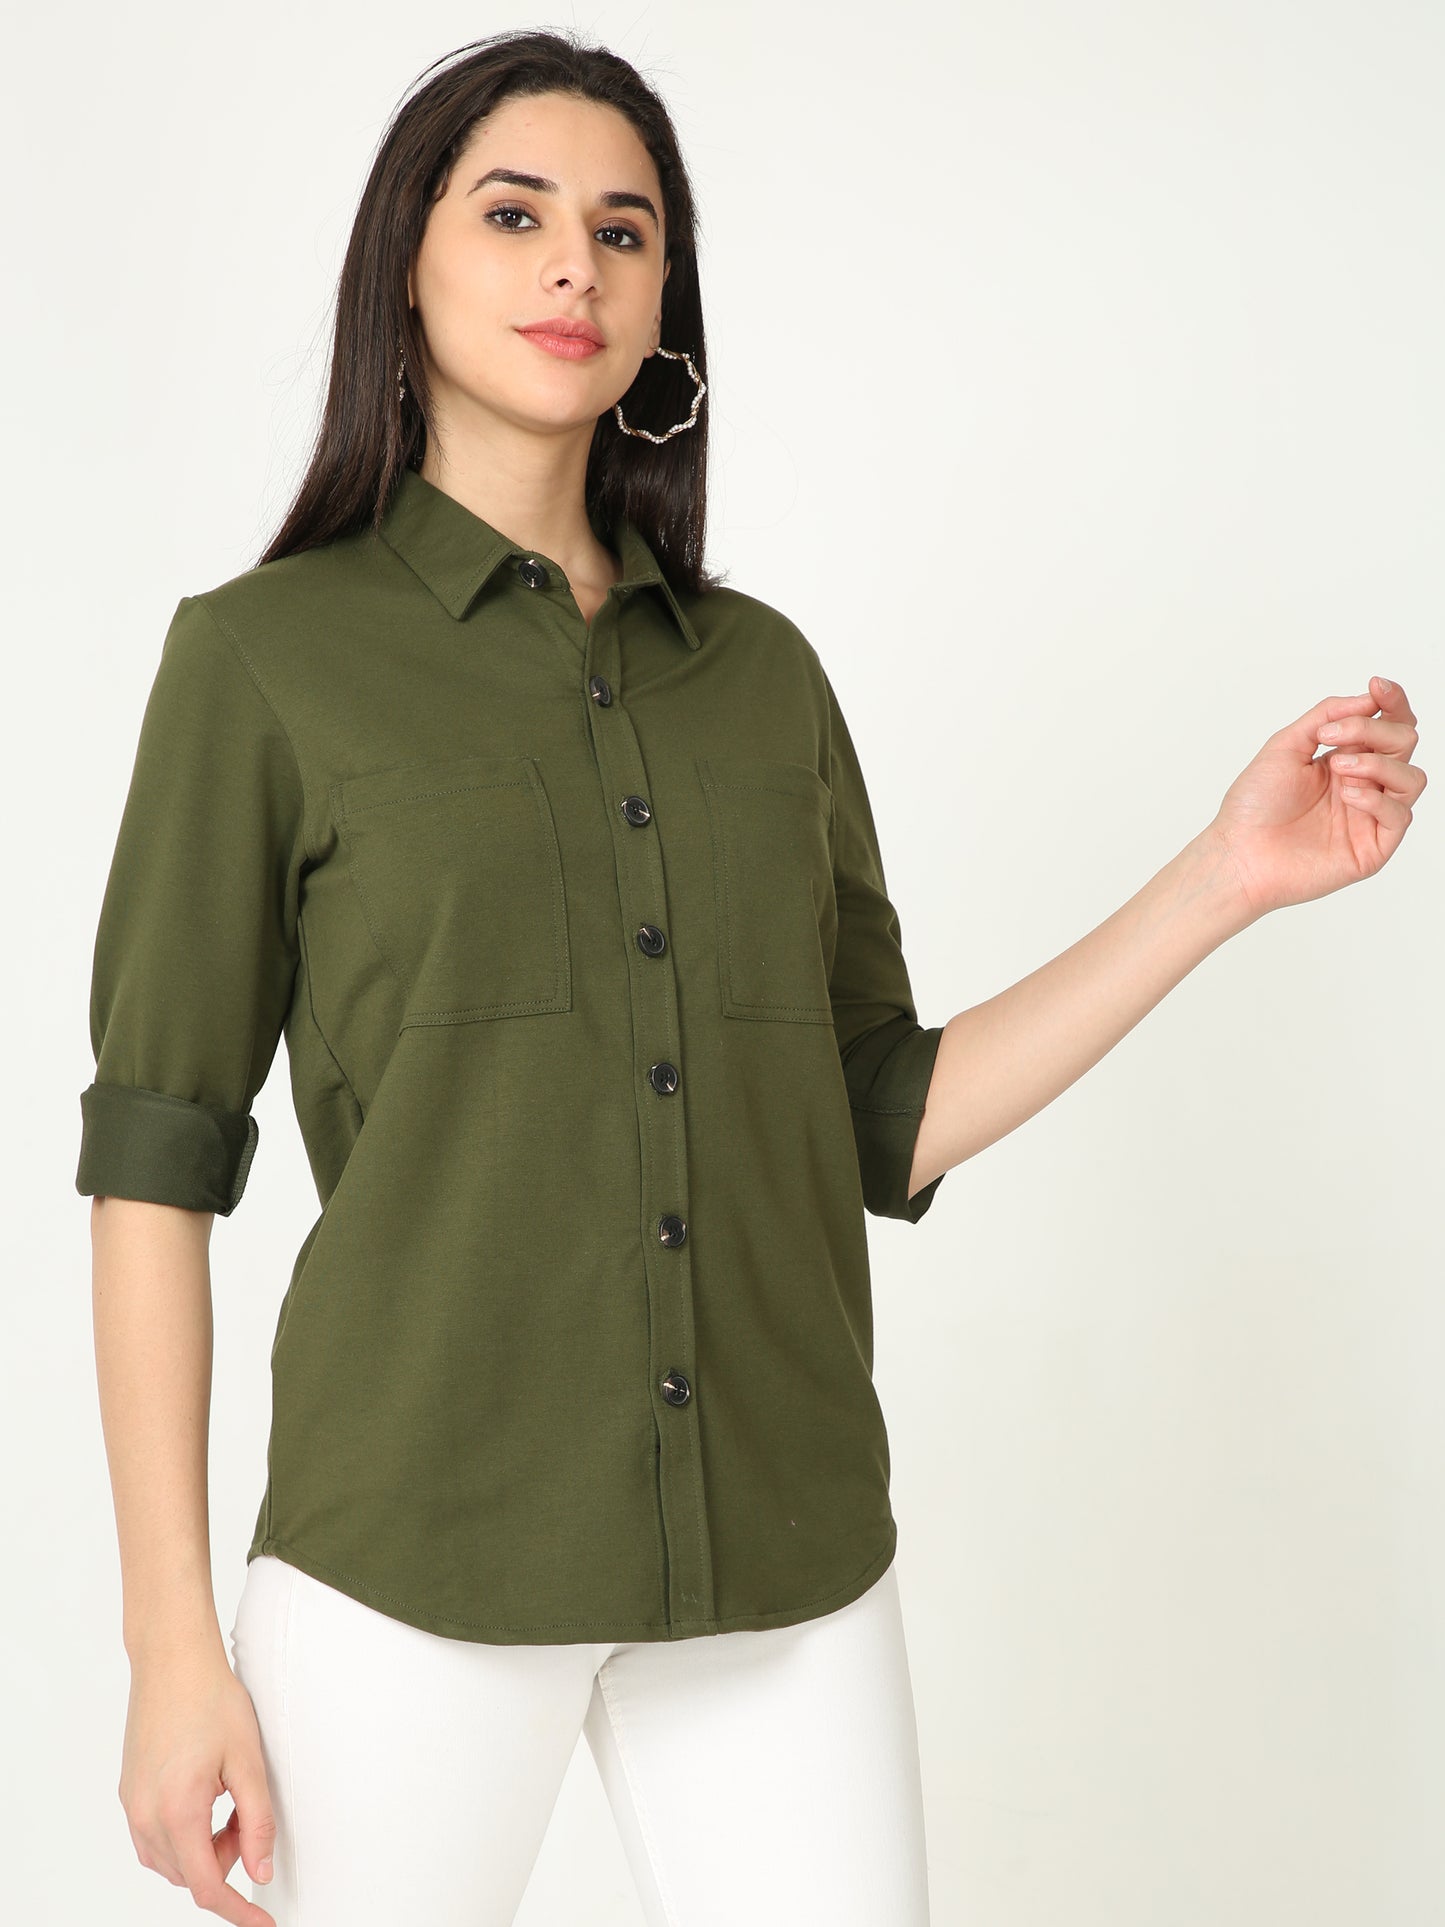 Green Double Pocket Royal Knit Overshirt - UNISEX